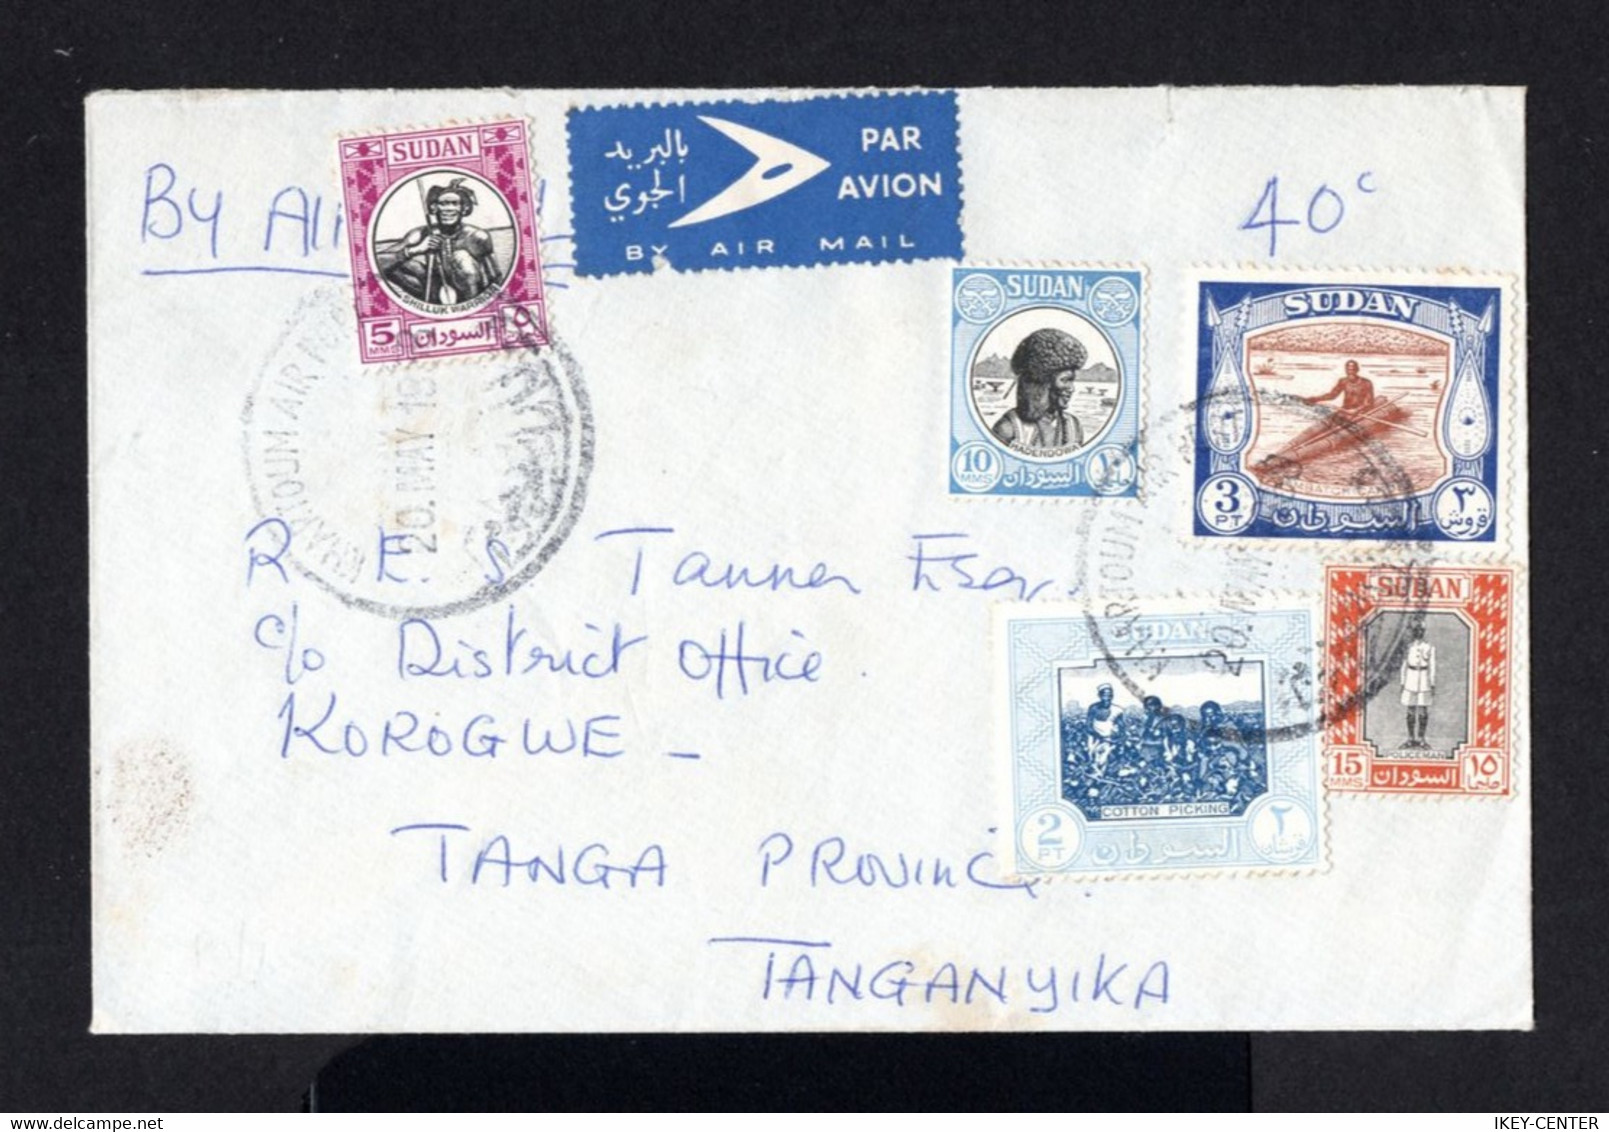 S4836-SUDAN-AIRMAIL COVER KHARTOUM To TANGA (tanganyika).1958.Enveloppe AERIEN SOUDAN - Zuid-Soedan